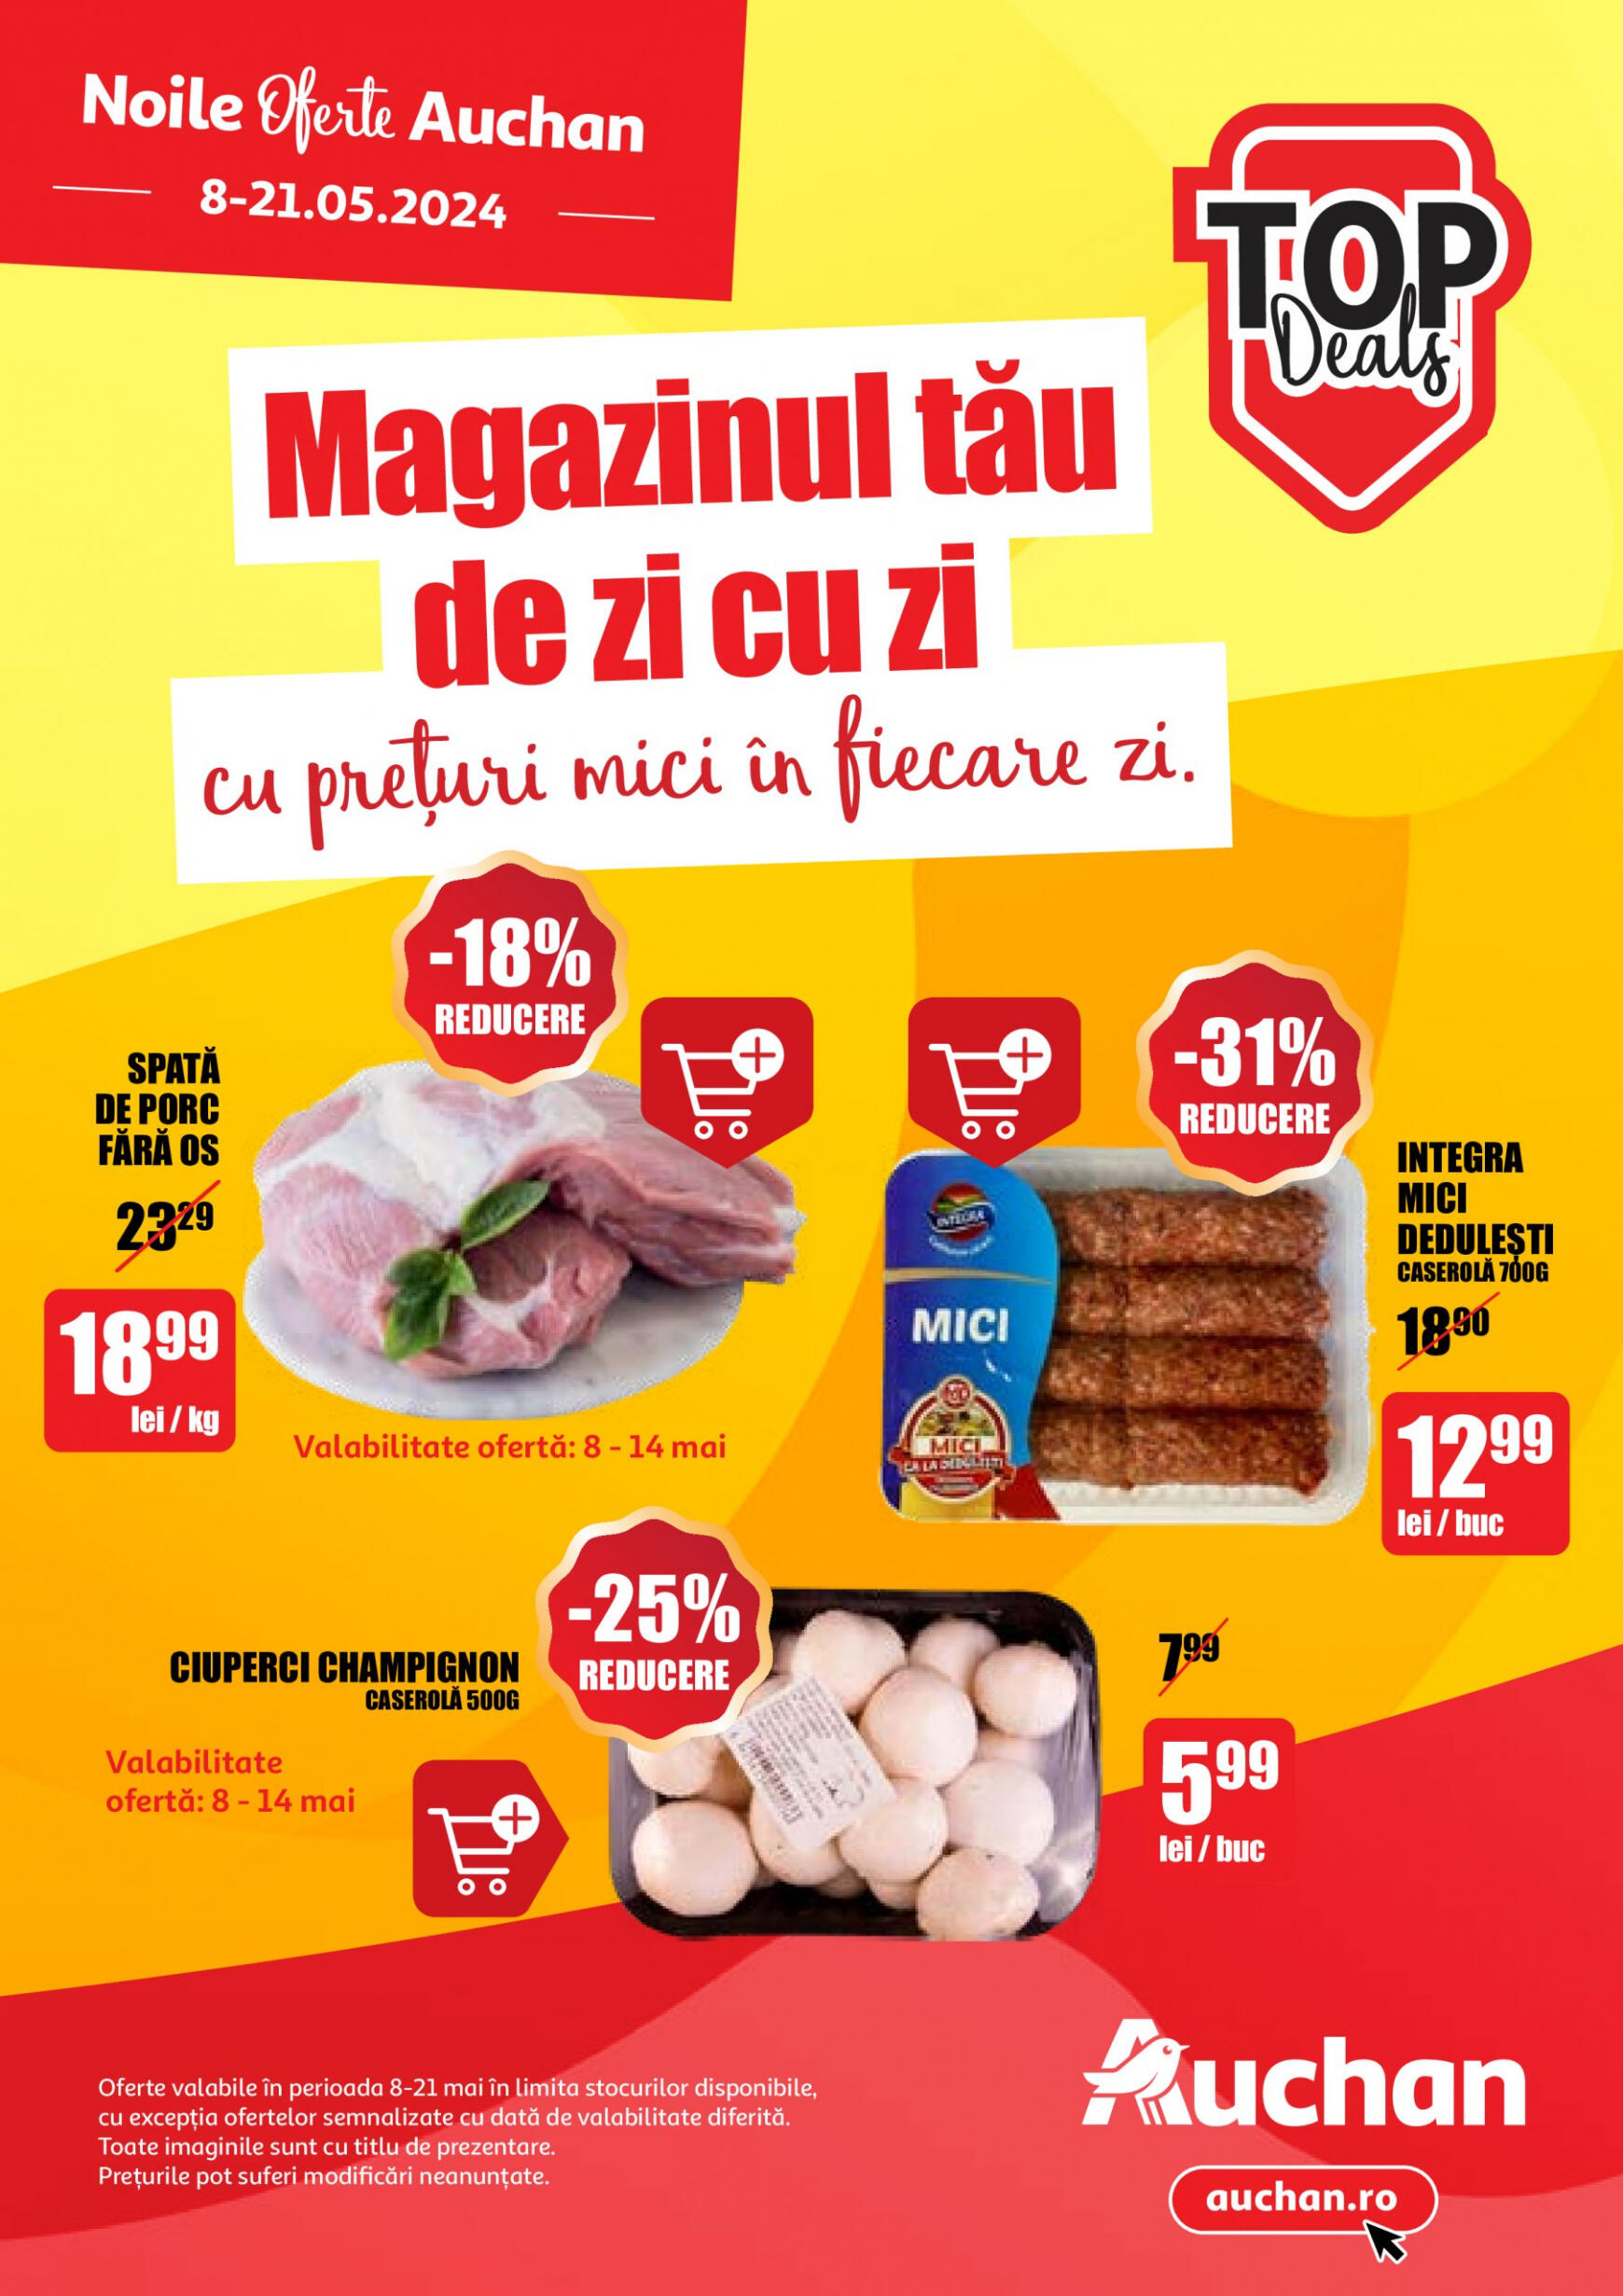 auchan - Catalog nou Auchan - Top deals 08.05. - 21.05.